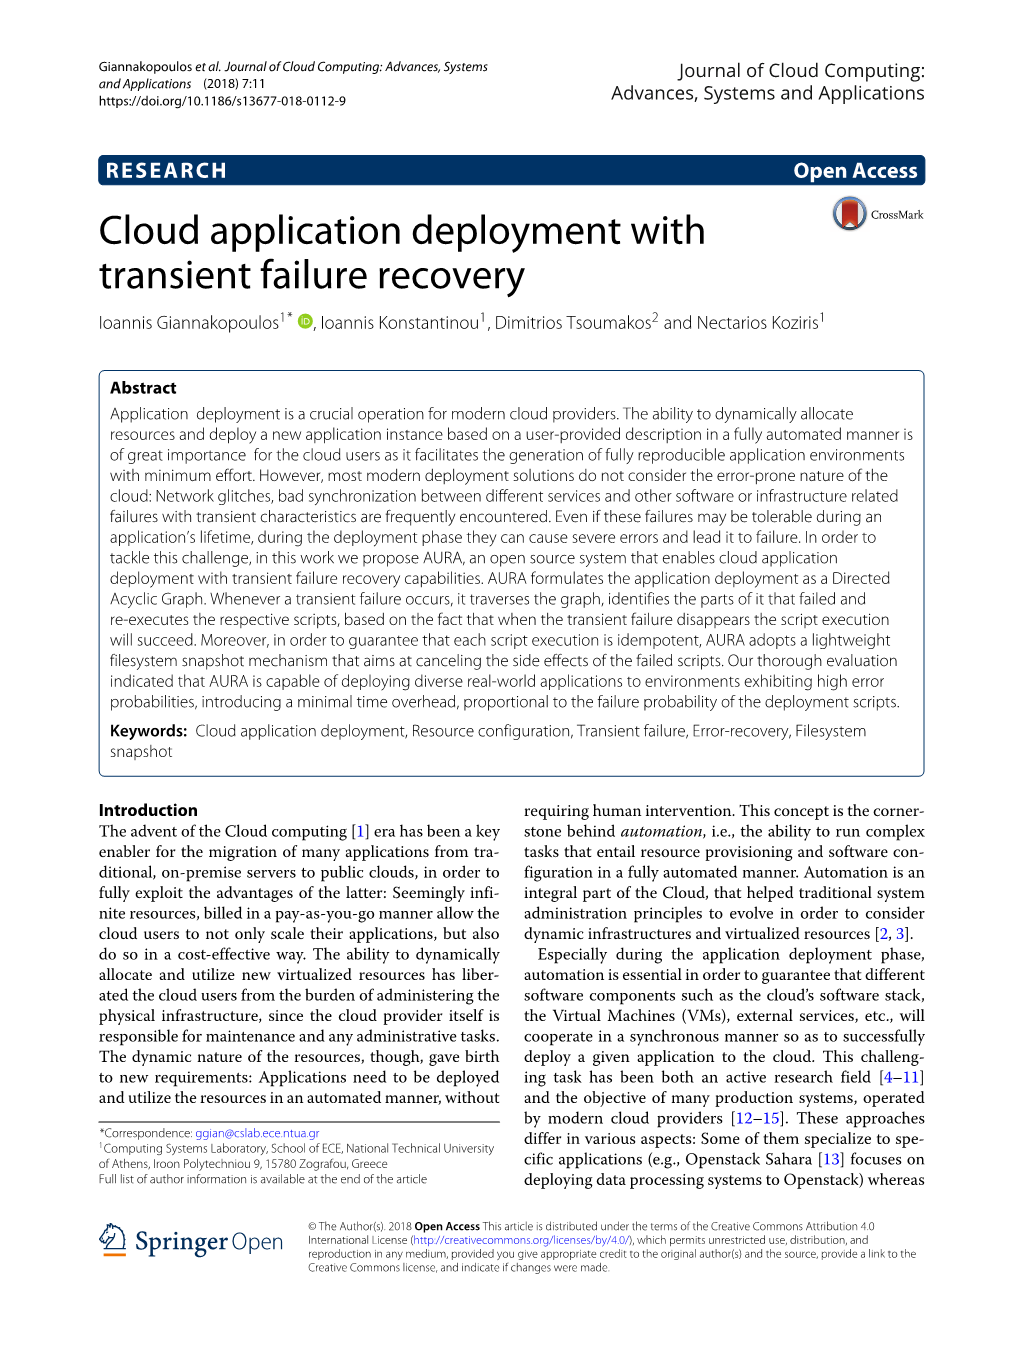 Cloud Application Deployment with Transient Failure Recovery Ioannis Giannakopoulos1* , Ioannis Konstantinou1, Dimitrios Tsoumakos2 and Nectarios Koziris1